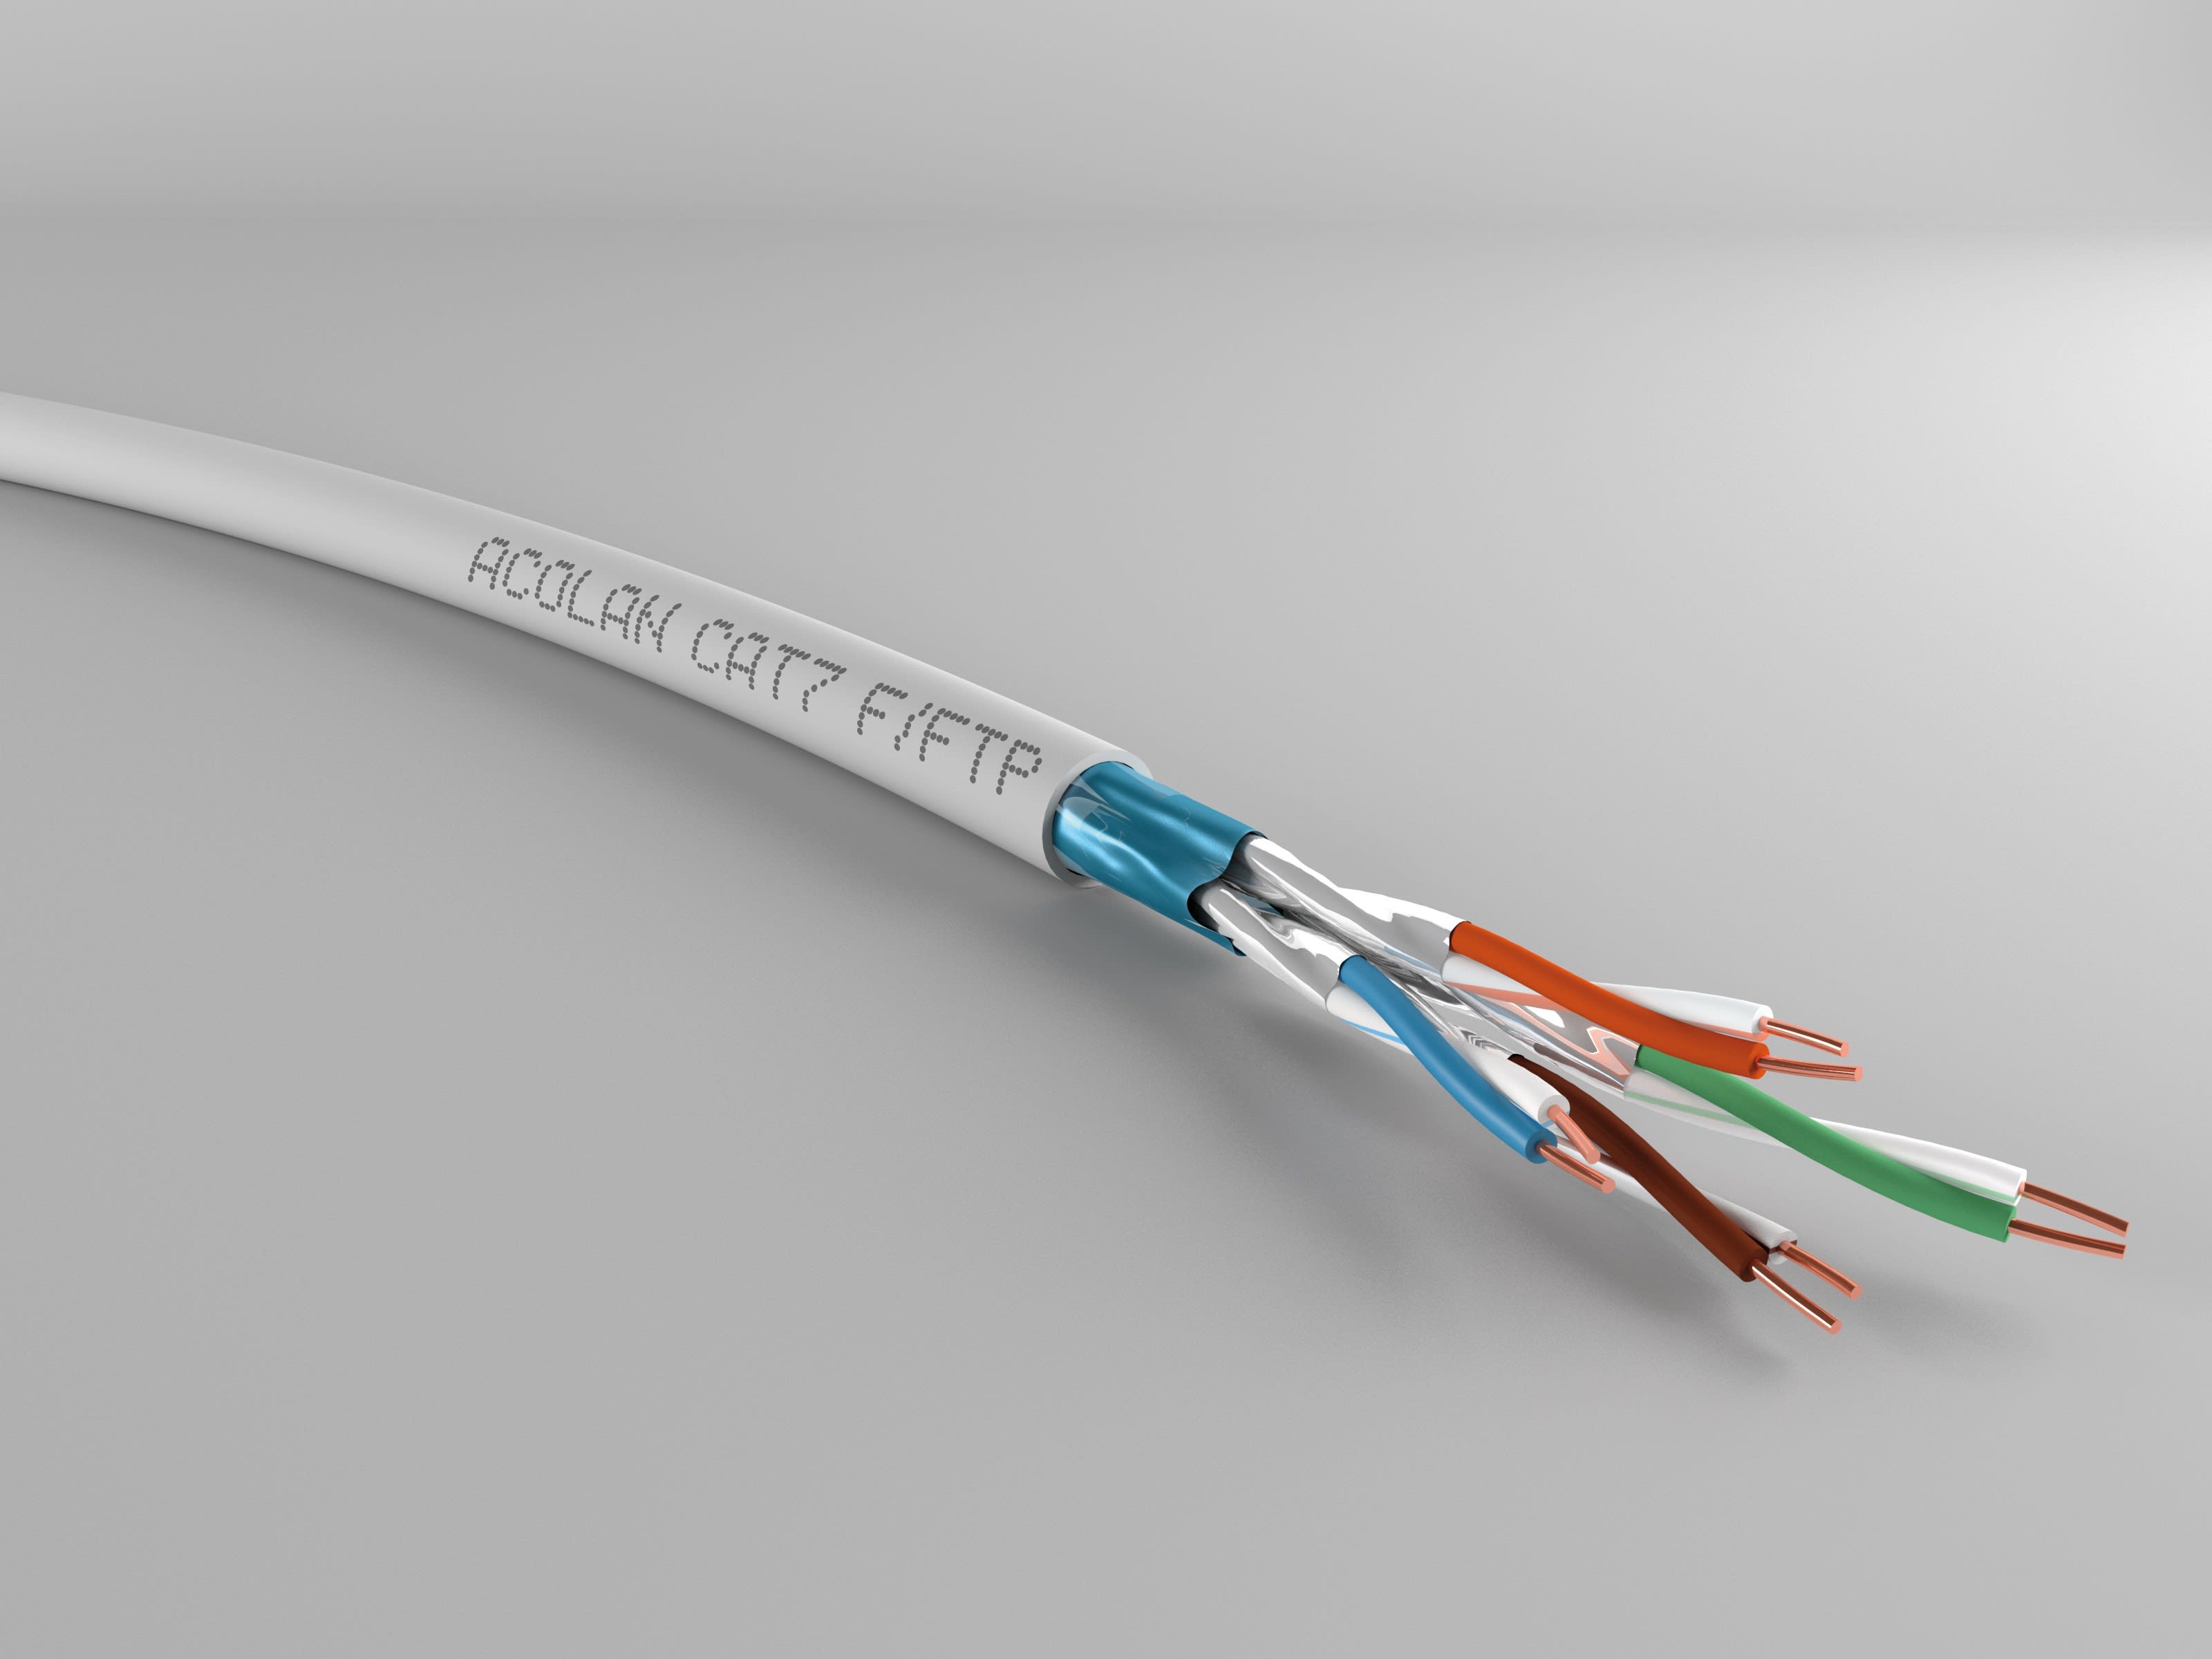 Câble Ethernet Acome 10 Gb CAT6A F/UTP R7291A-T500 